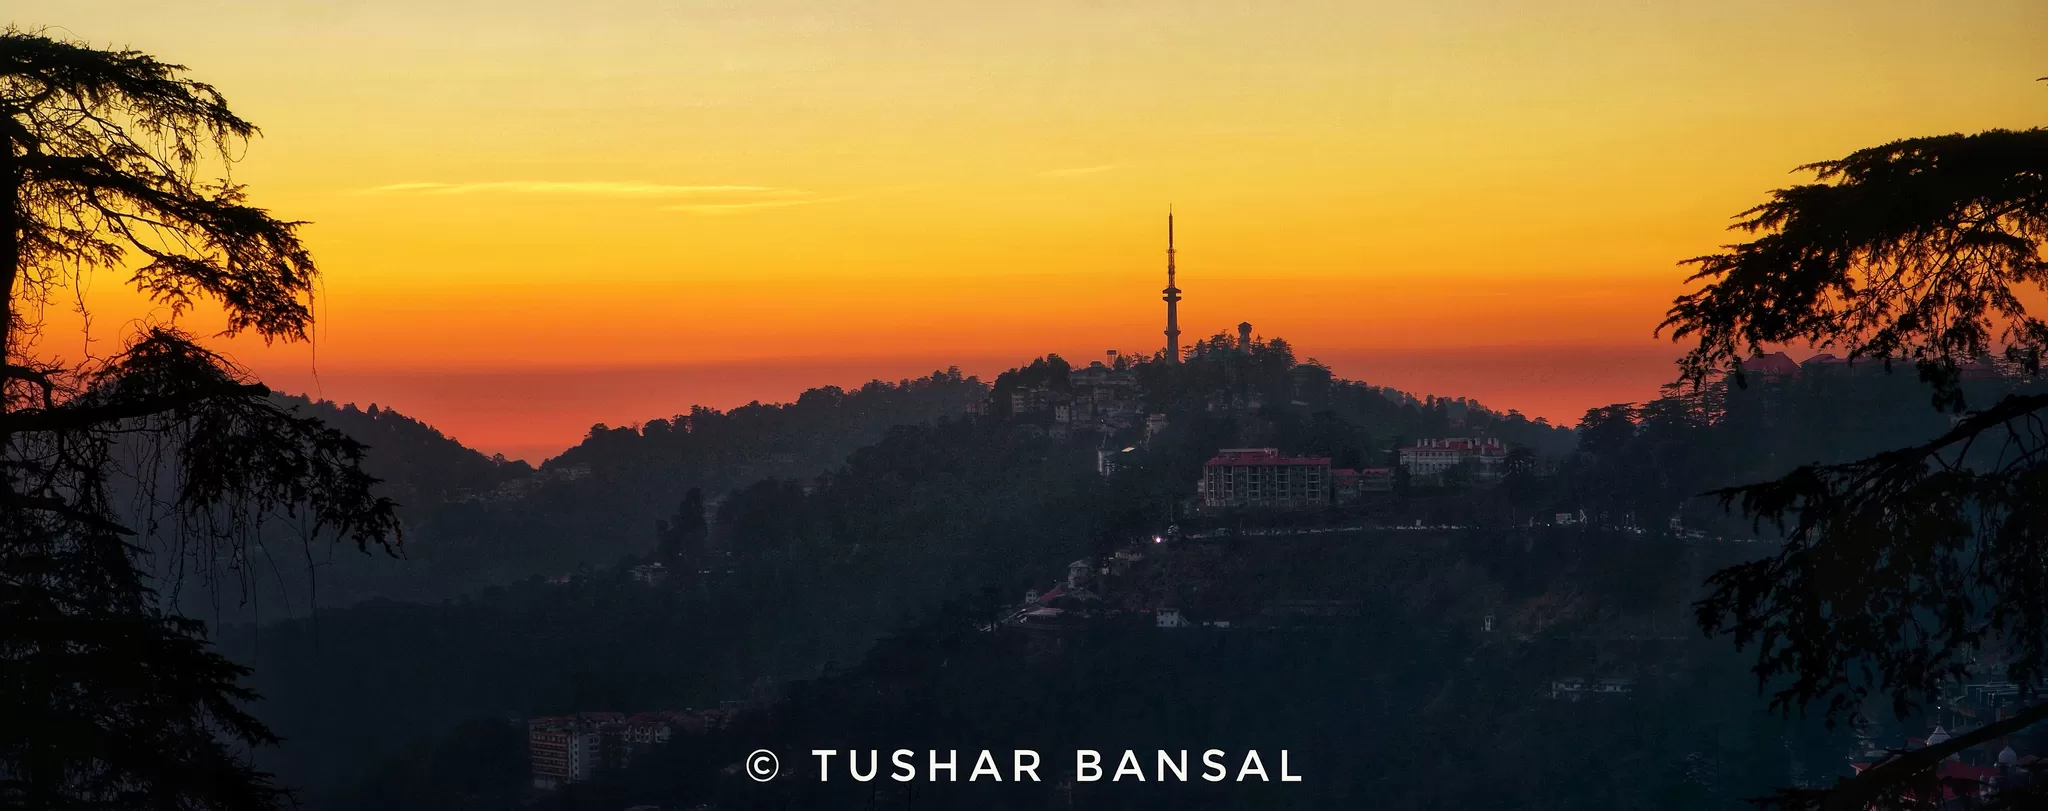 Cover Image of Tushar Bansal